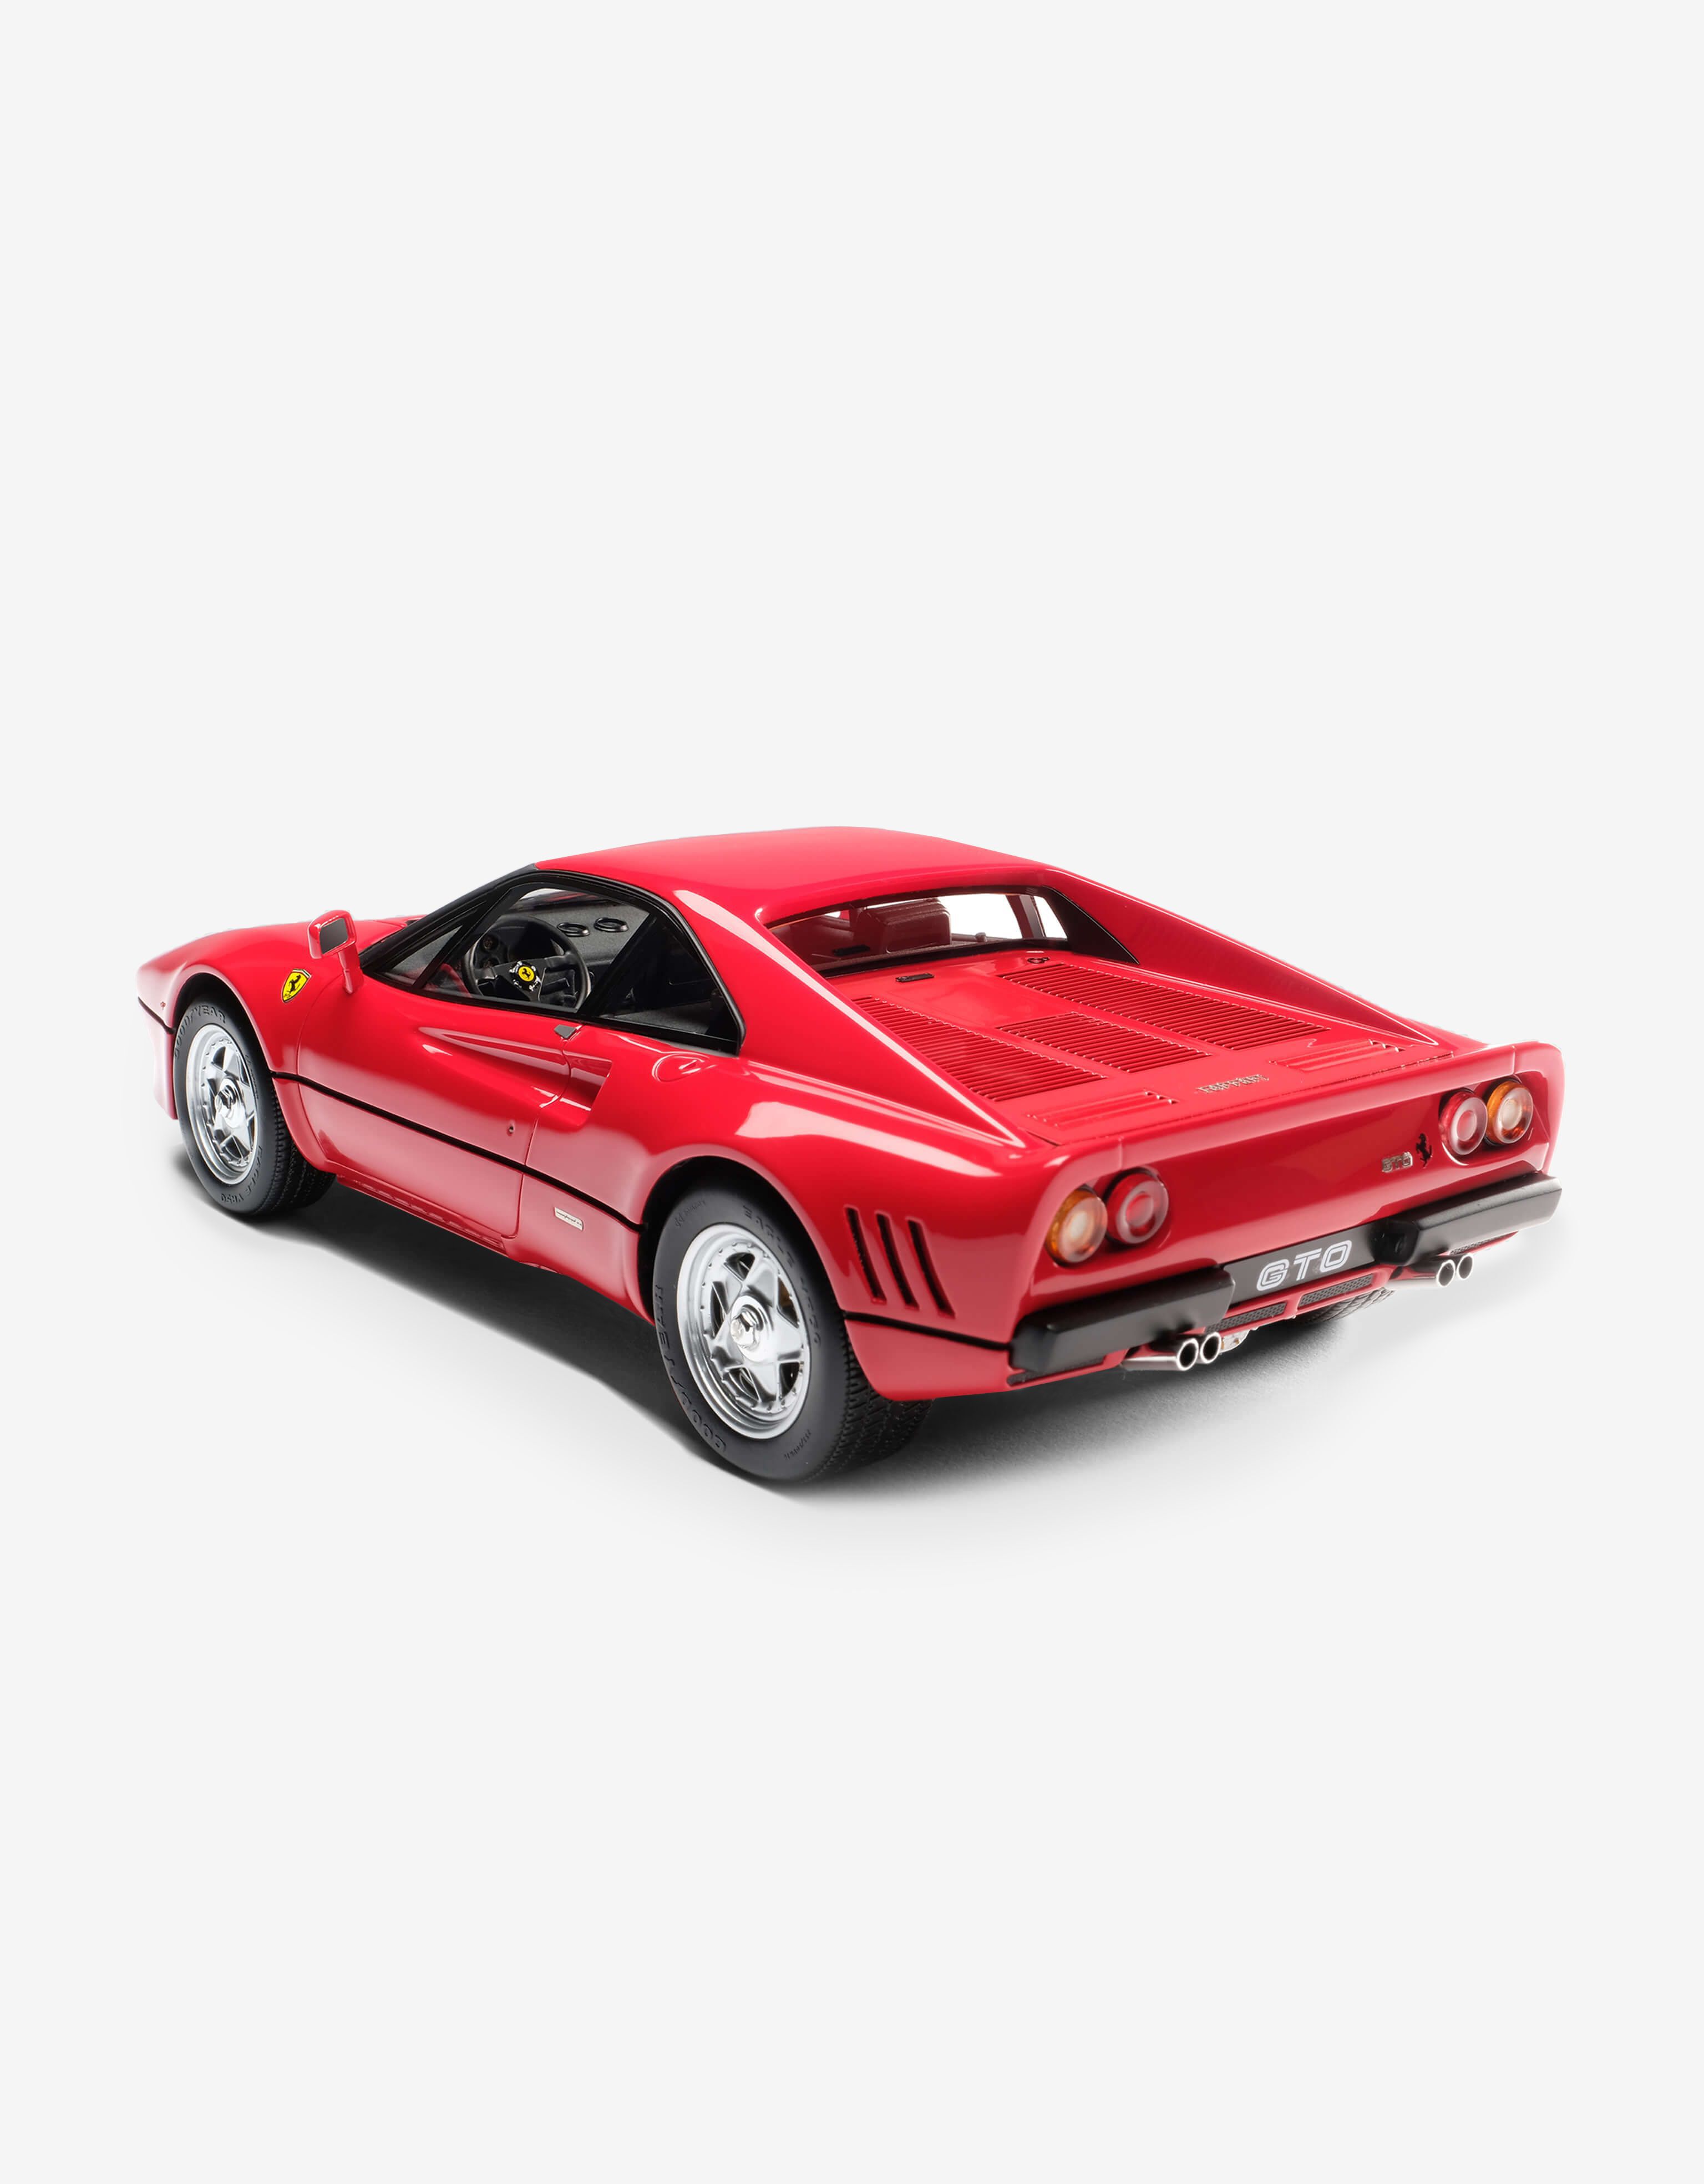 Ferrari 288 GTO Le Mans model in 1:18 scale in Red | Ferrari®